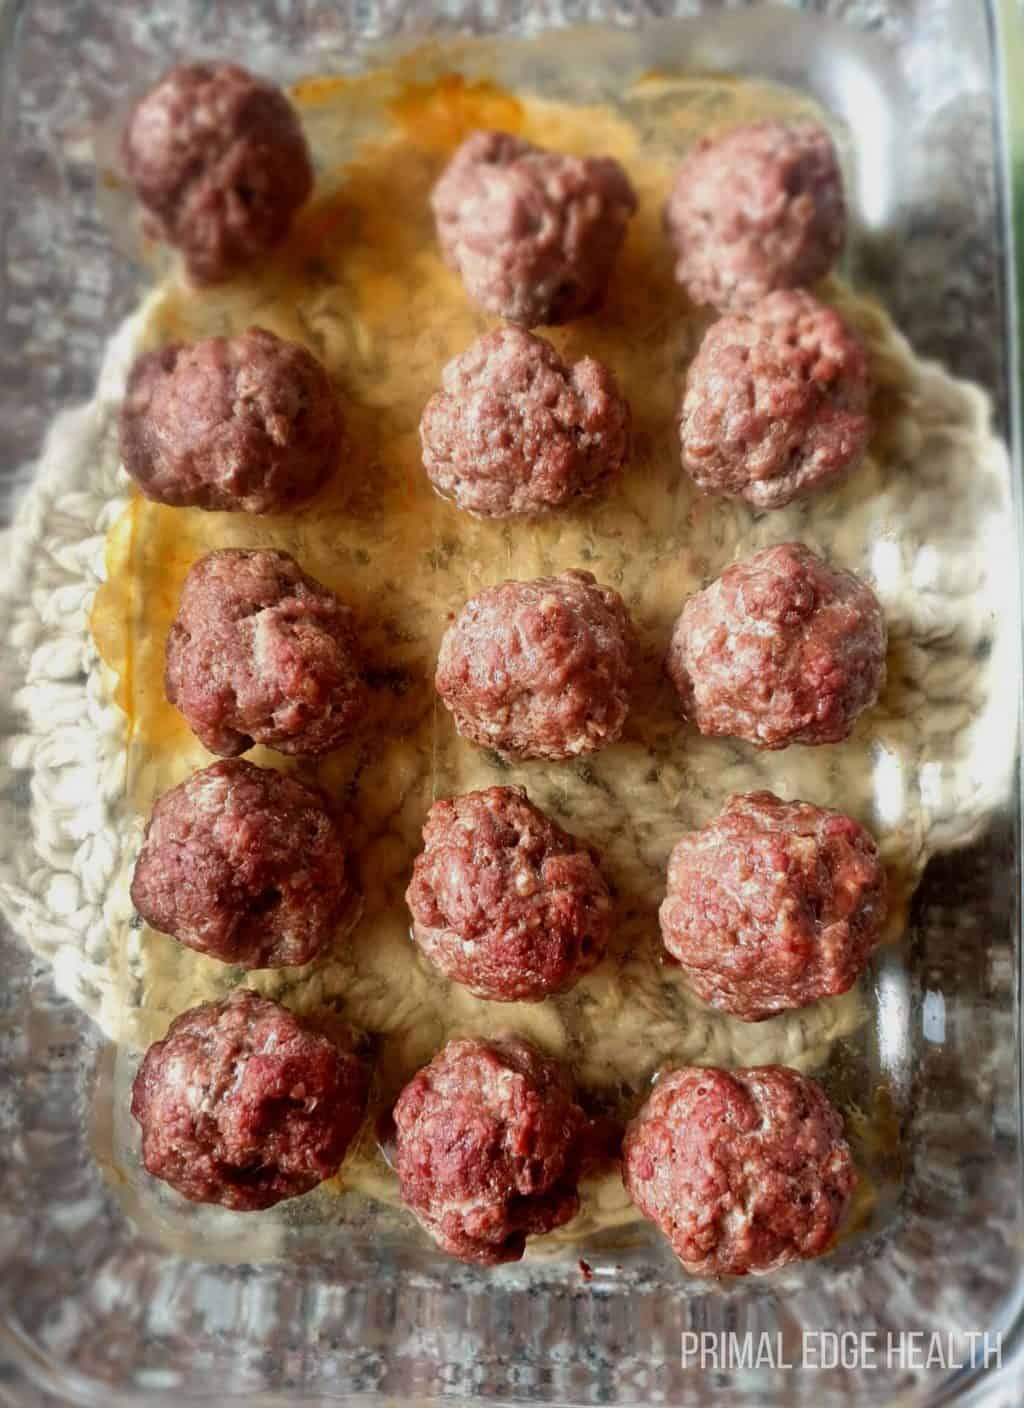 A batch of carnivore meatballs in a glass dish.